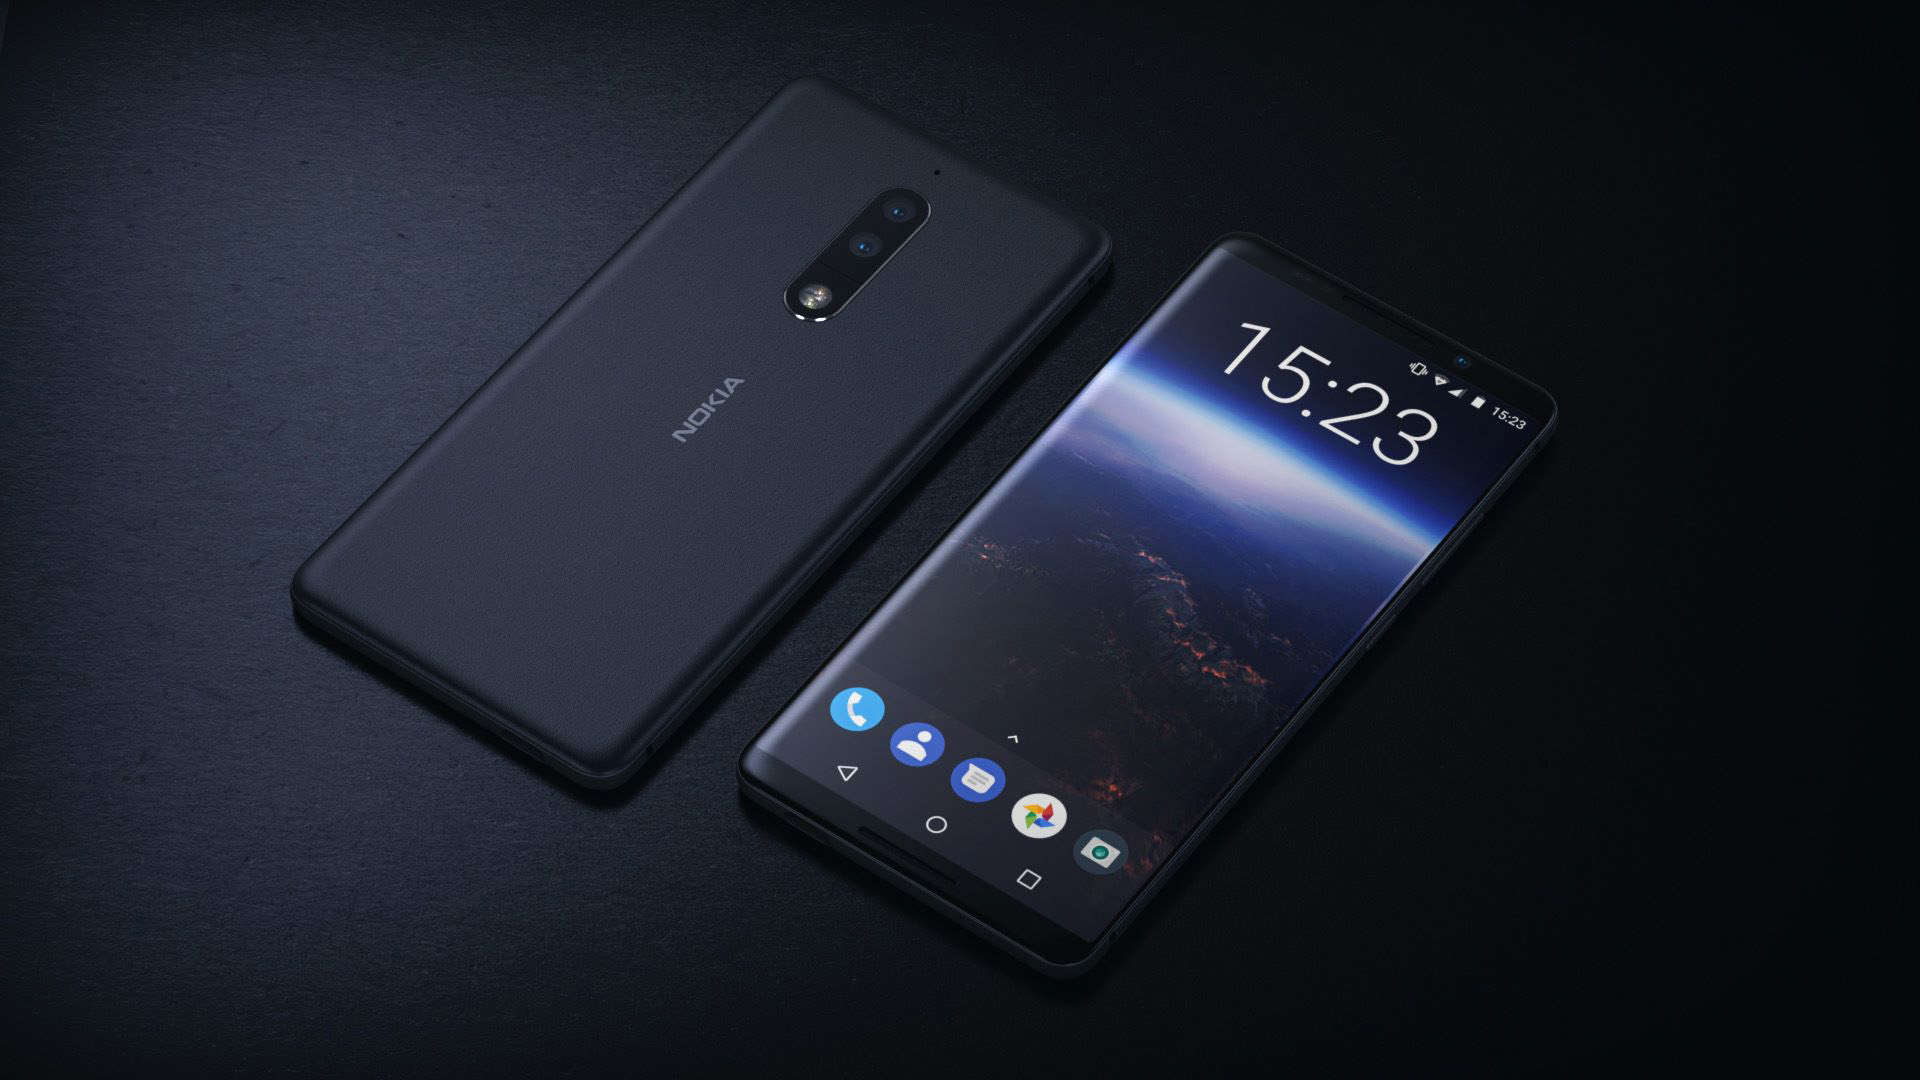 Nokia will present new smartphone on 4 October